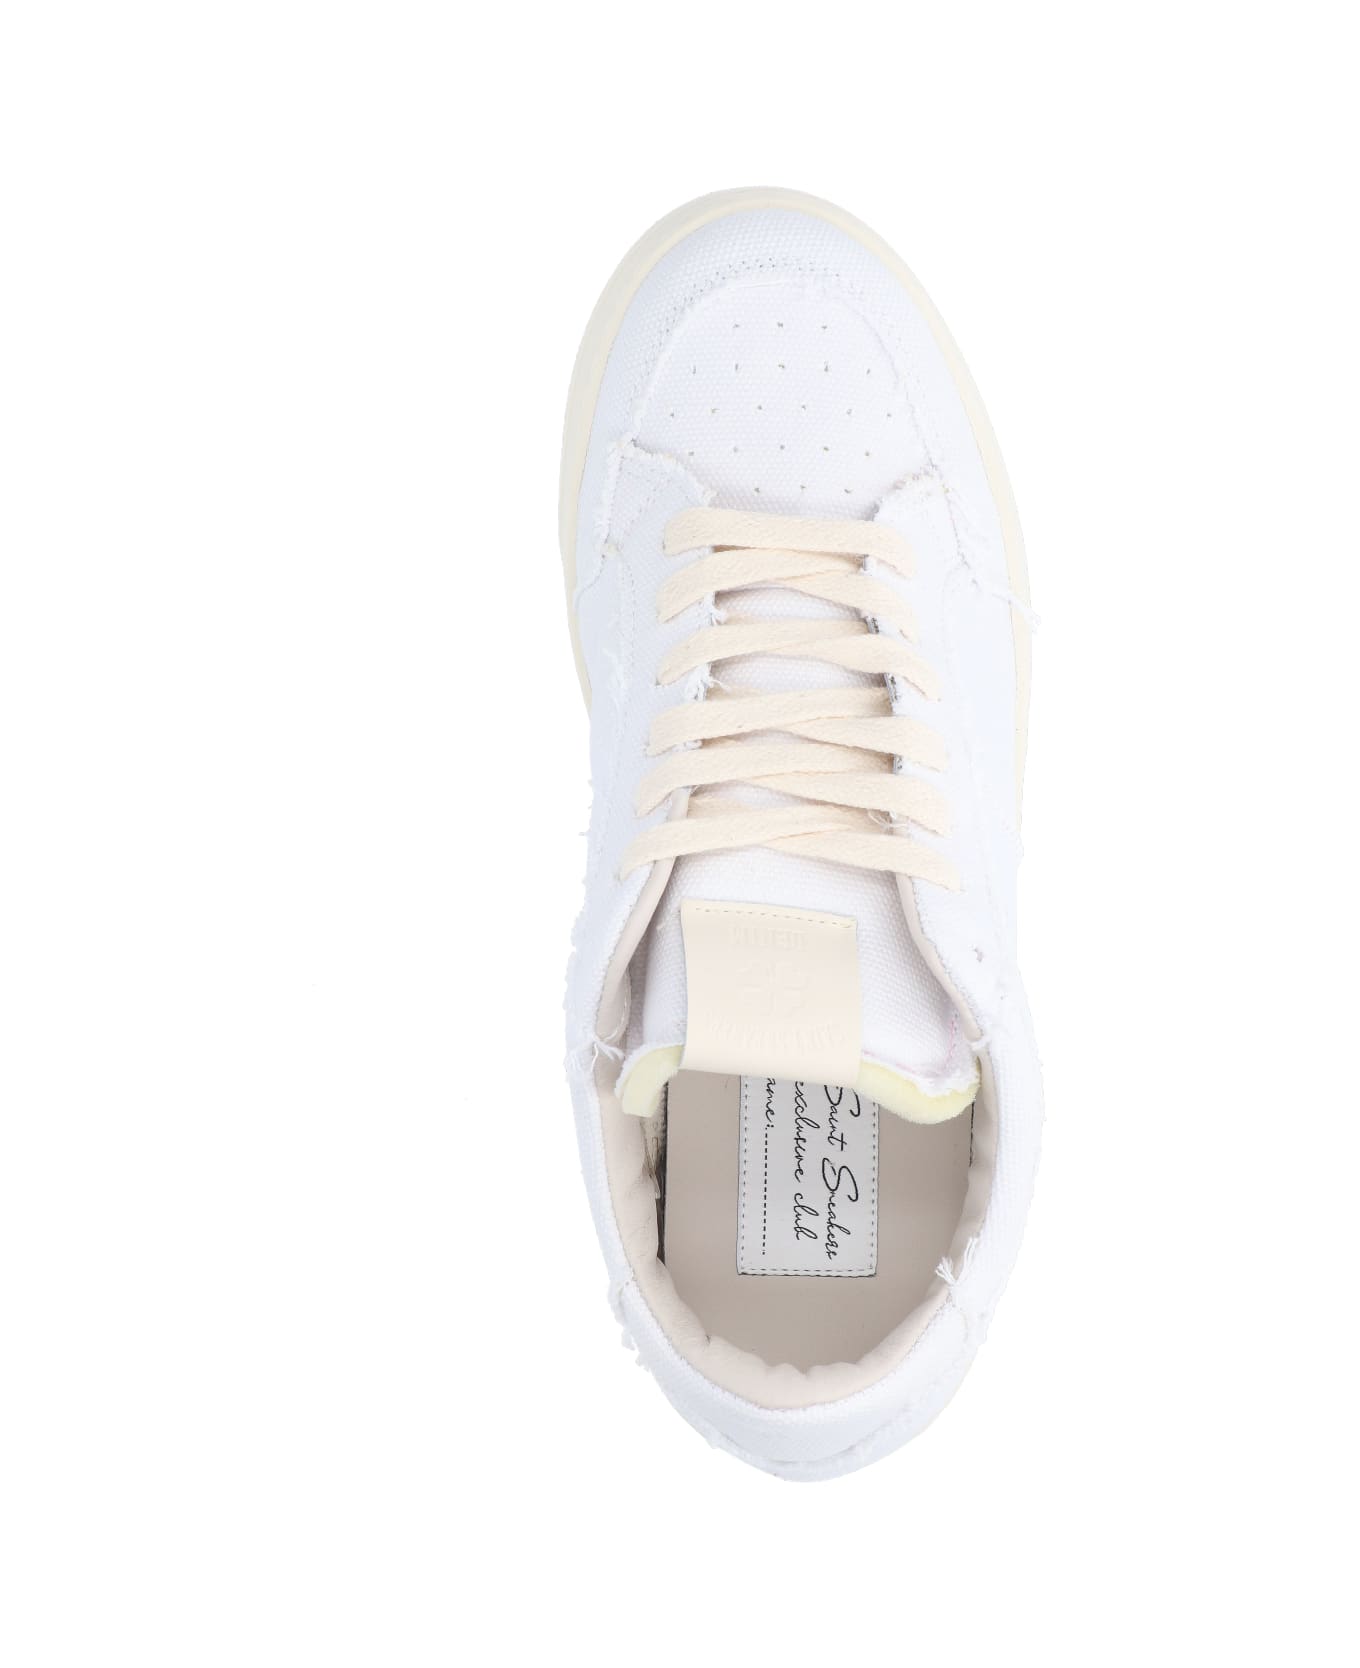 Saint Sneakers "denim M" Sneakers - White